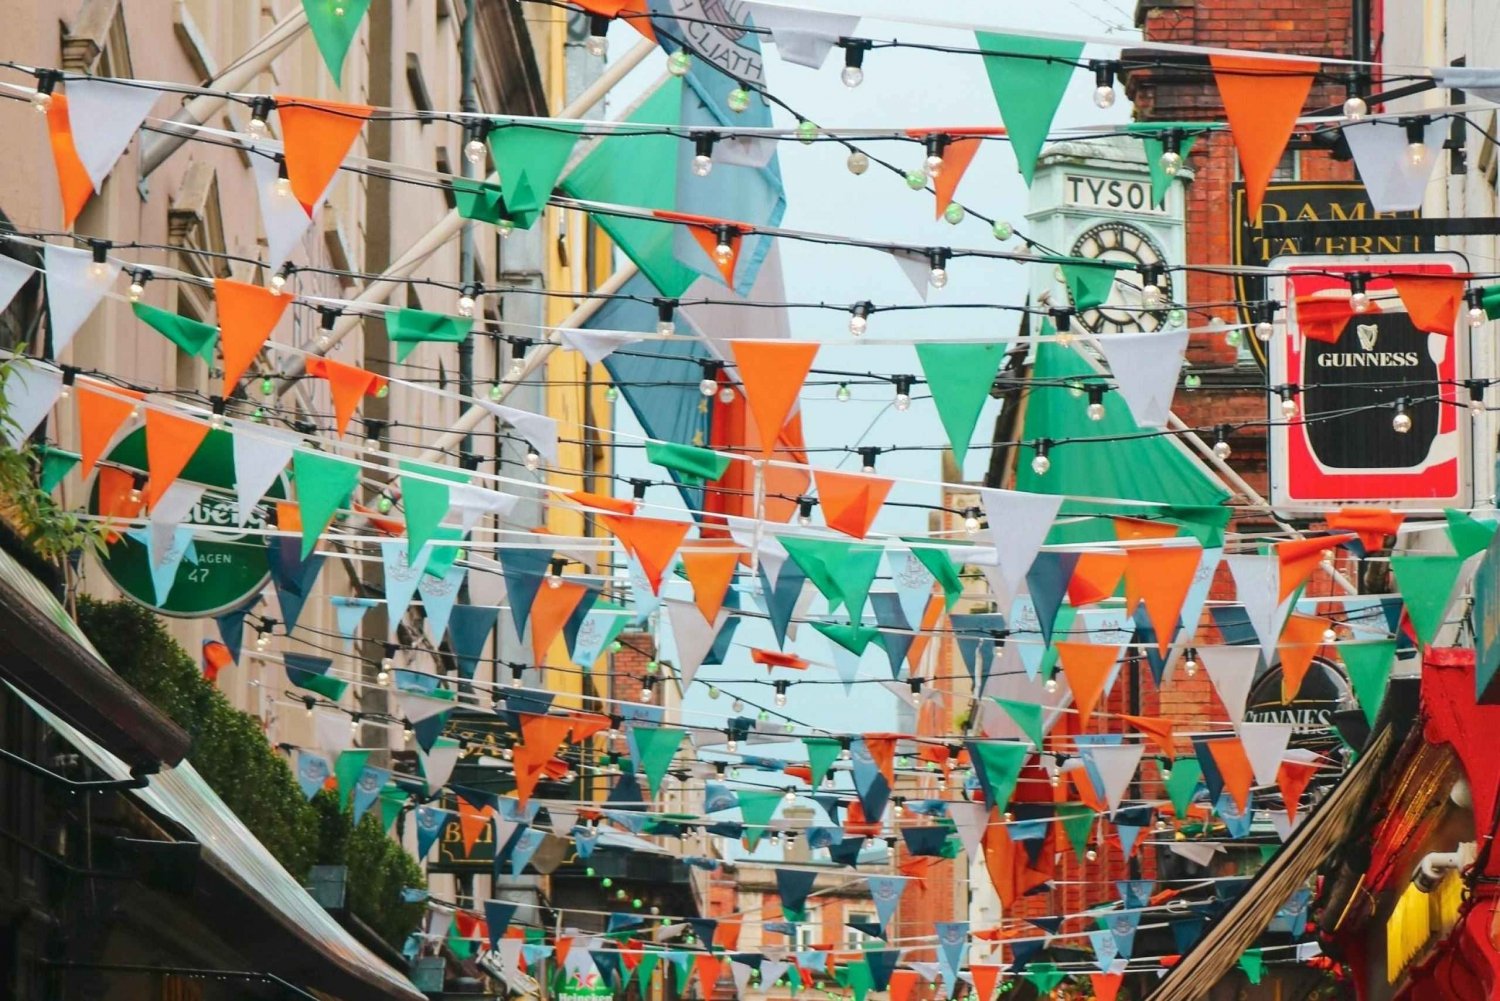 Dublin: Culture, Folklore and Literature Walking Tour